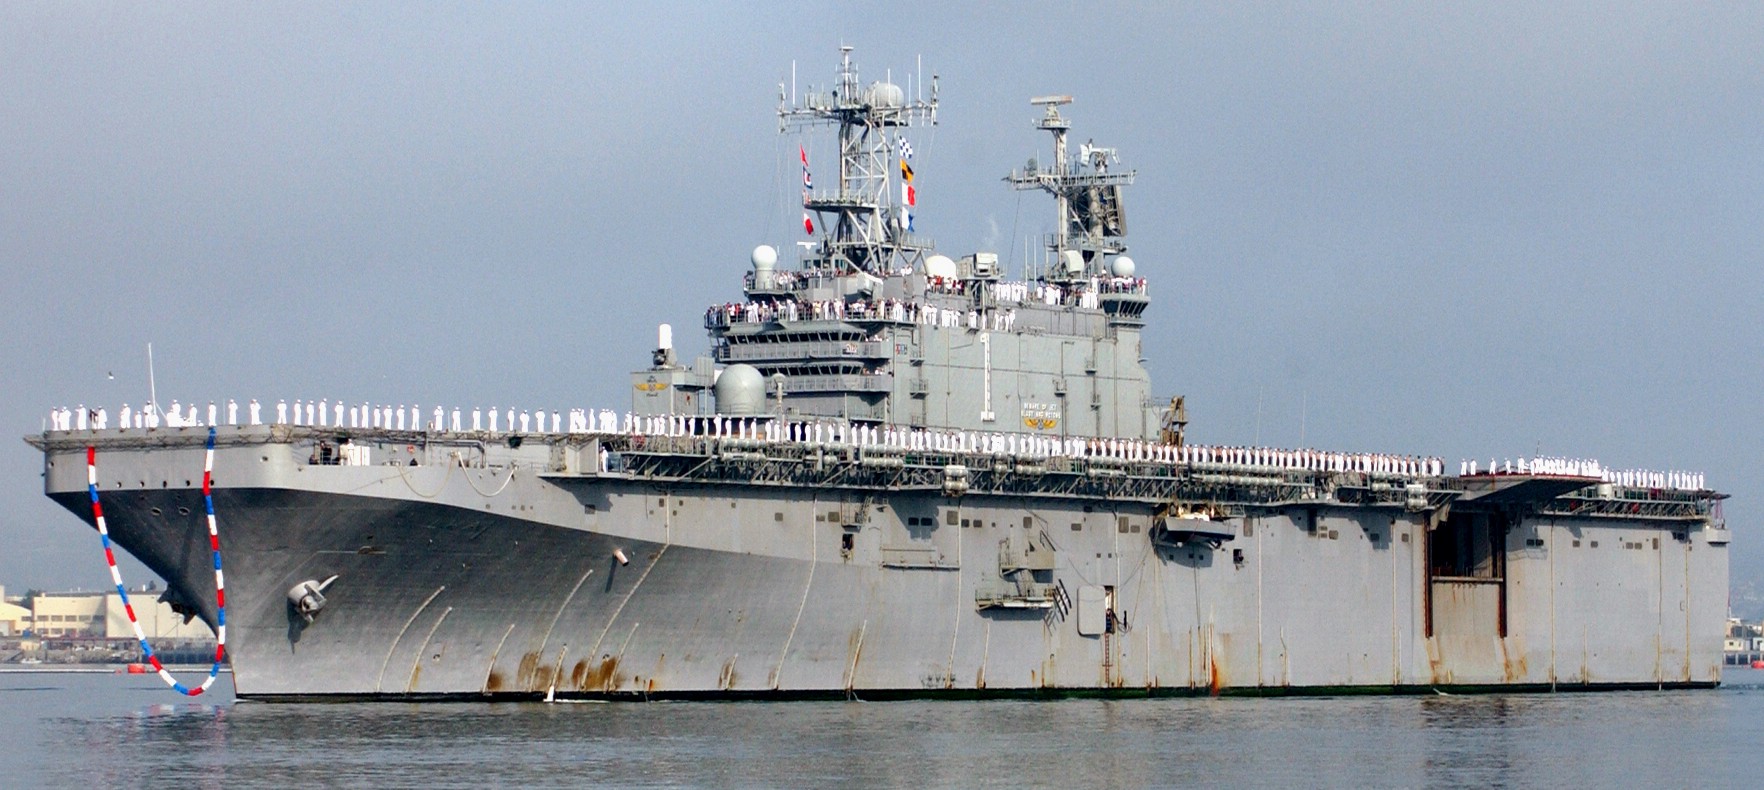 lha-1 uss tarawa amphibious assault ship us navy san diego california 18